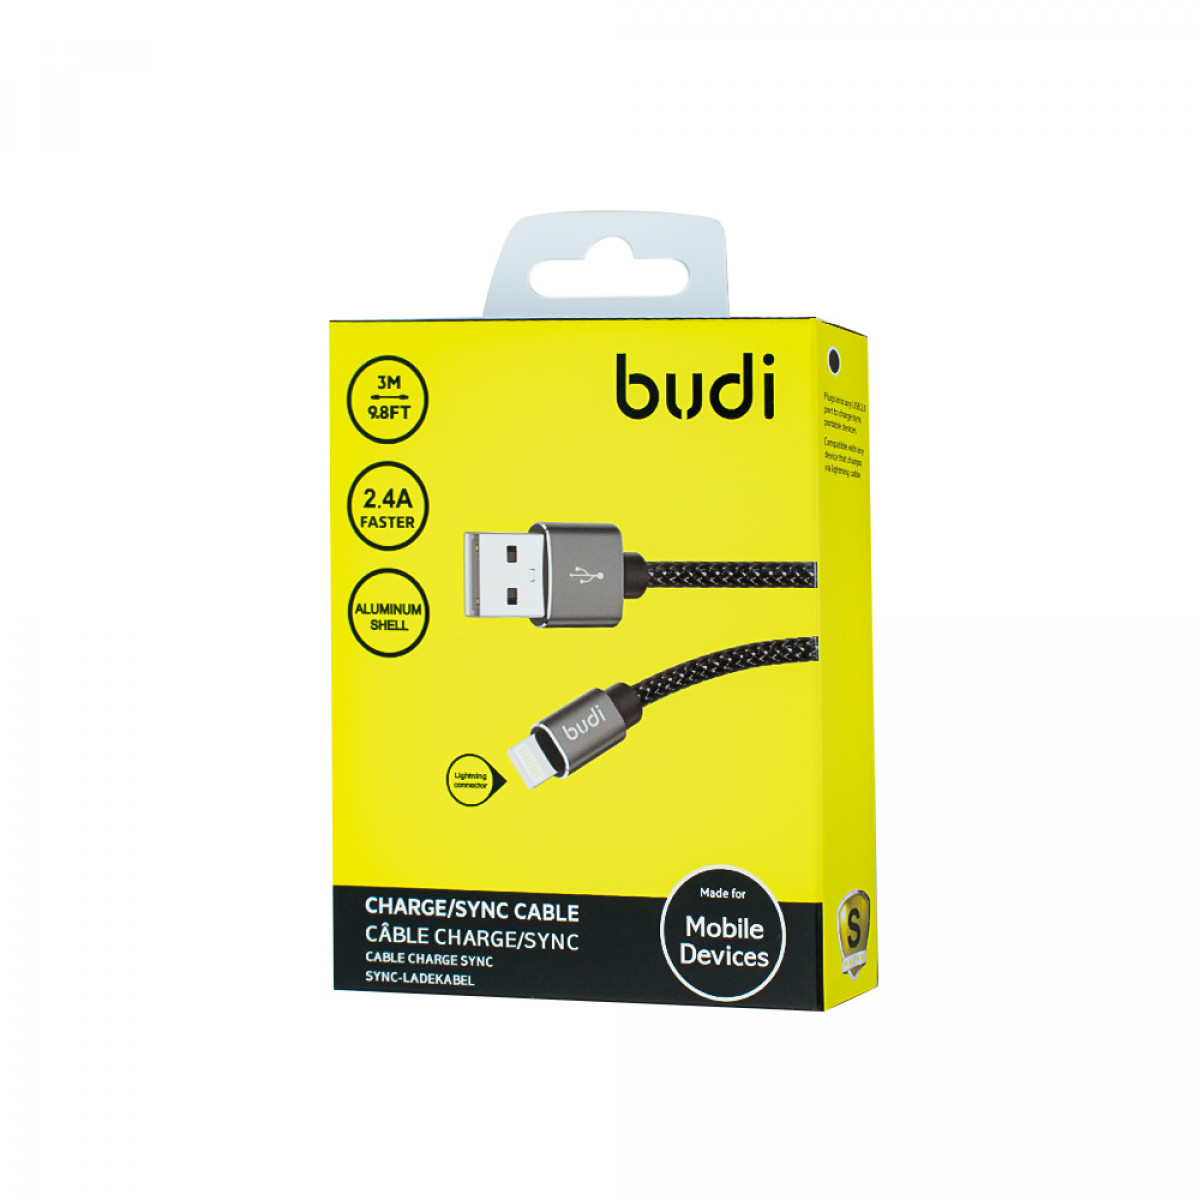 M8J206L09 - USB-кабель Budi Lightning to USB Charge/Sync 3м